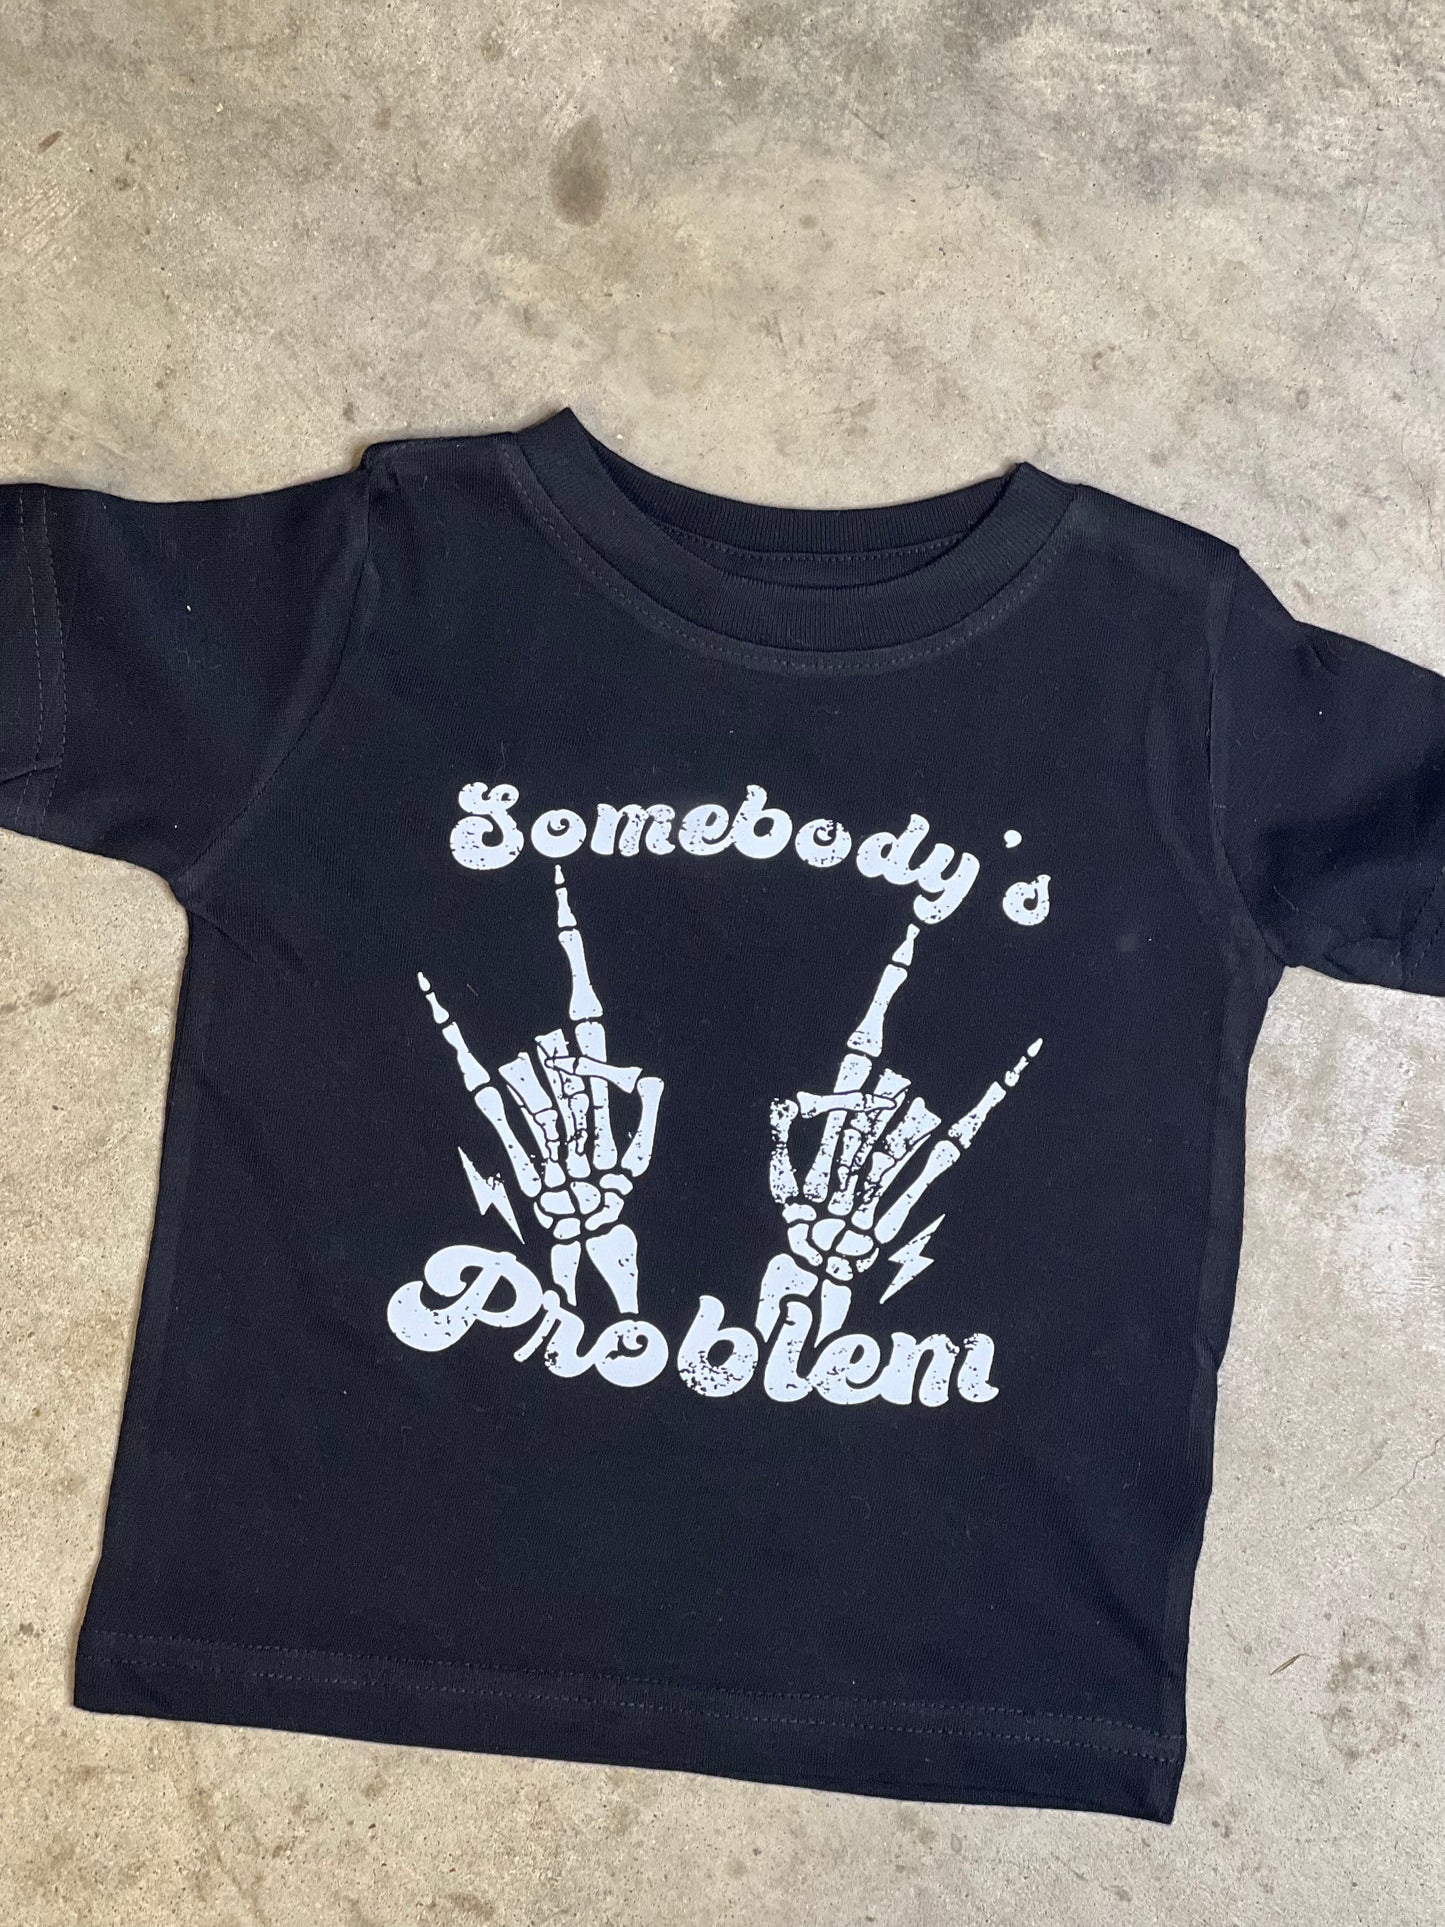 Somebody's Problem | Black Graphic T-shirt